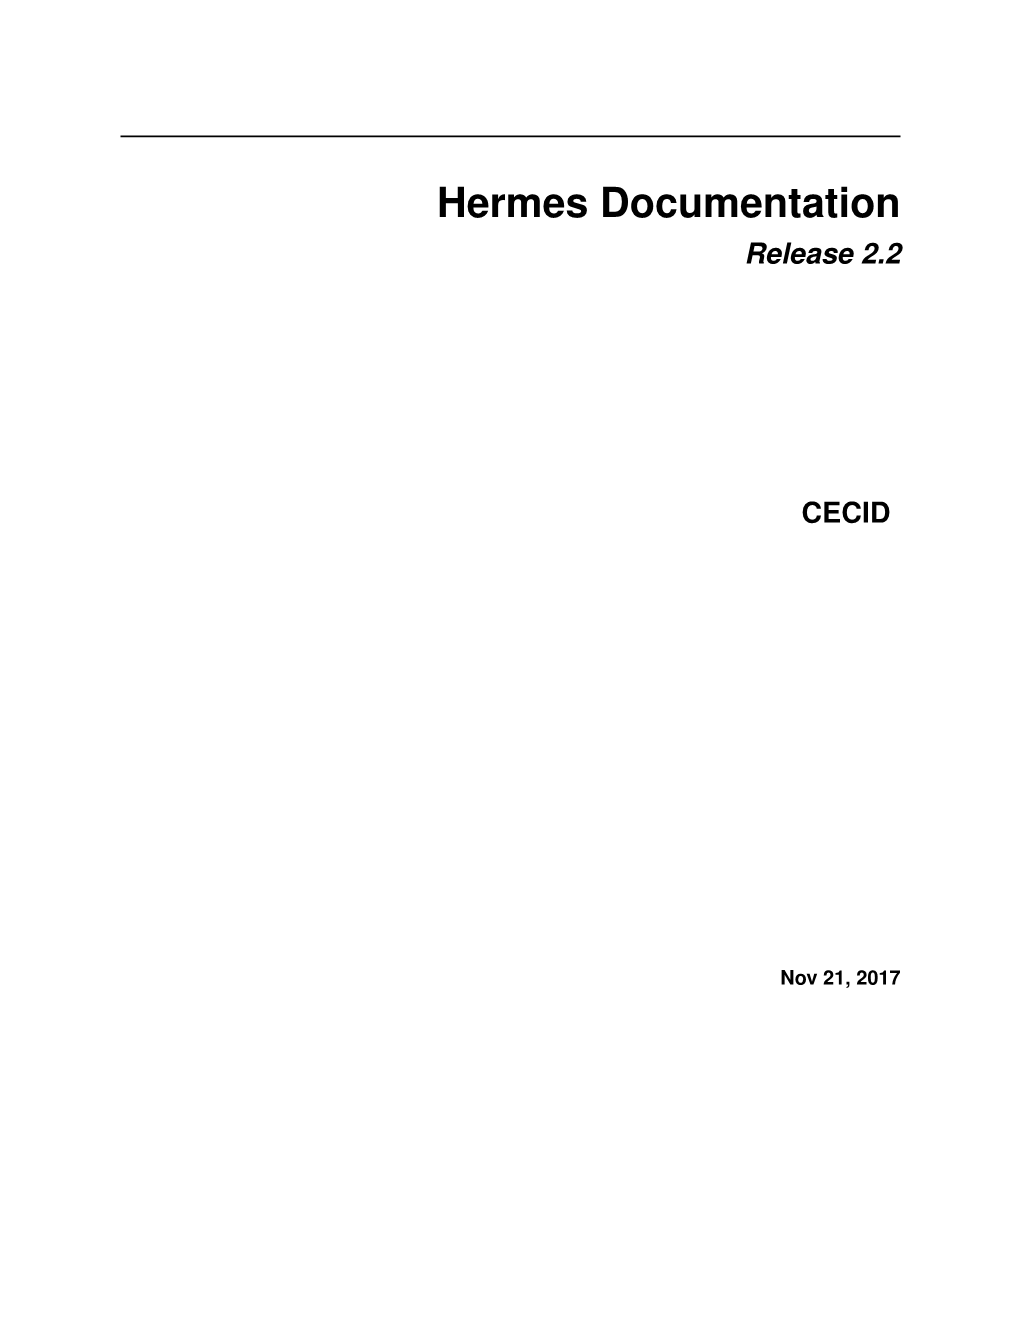 Hermes Documentation Release 2.2